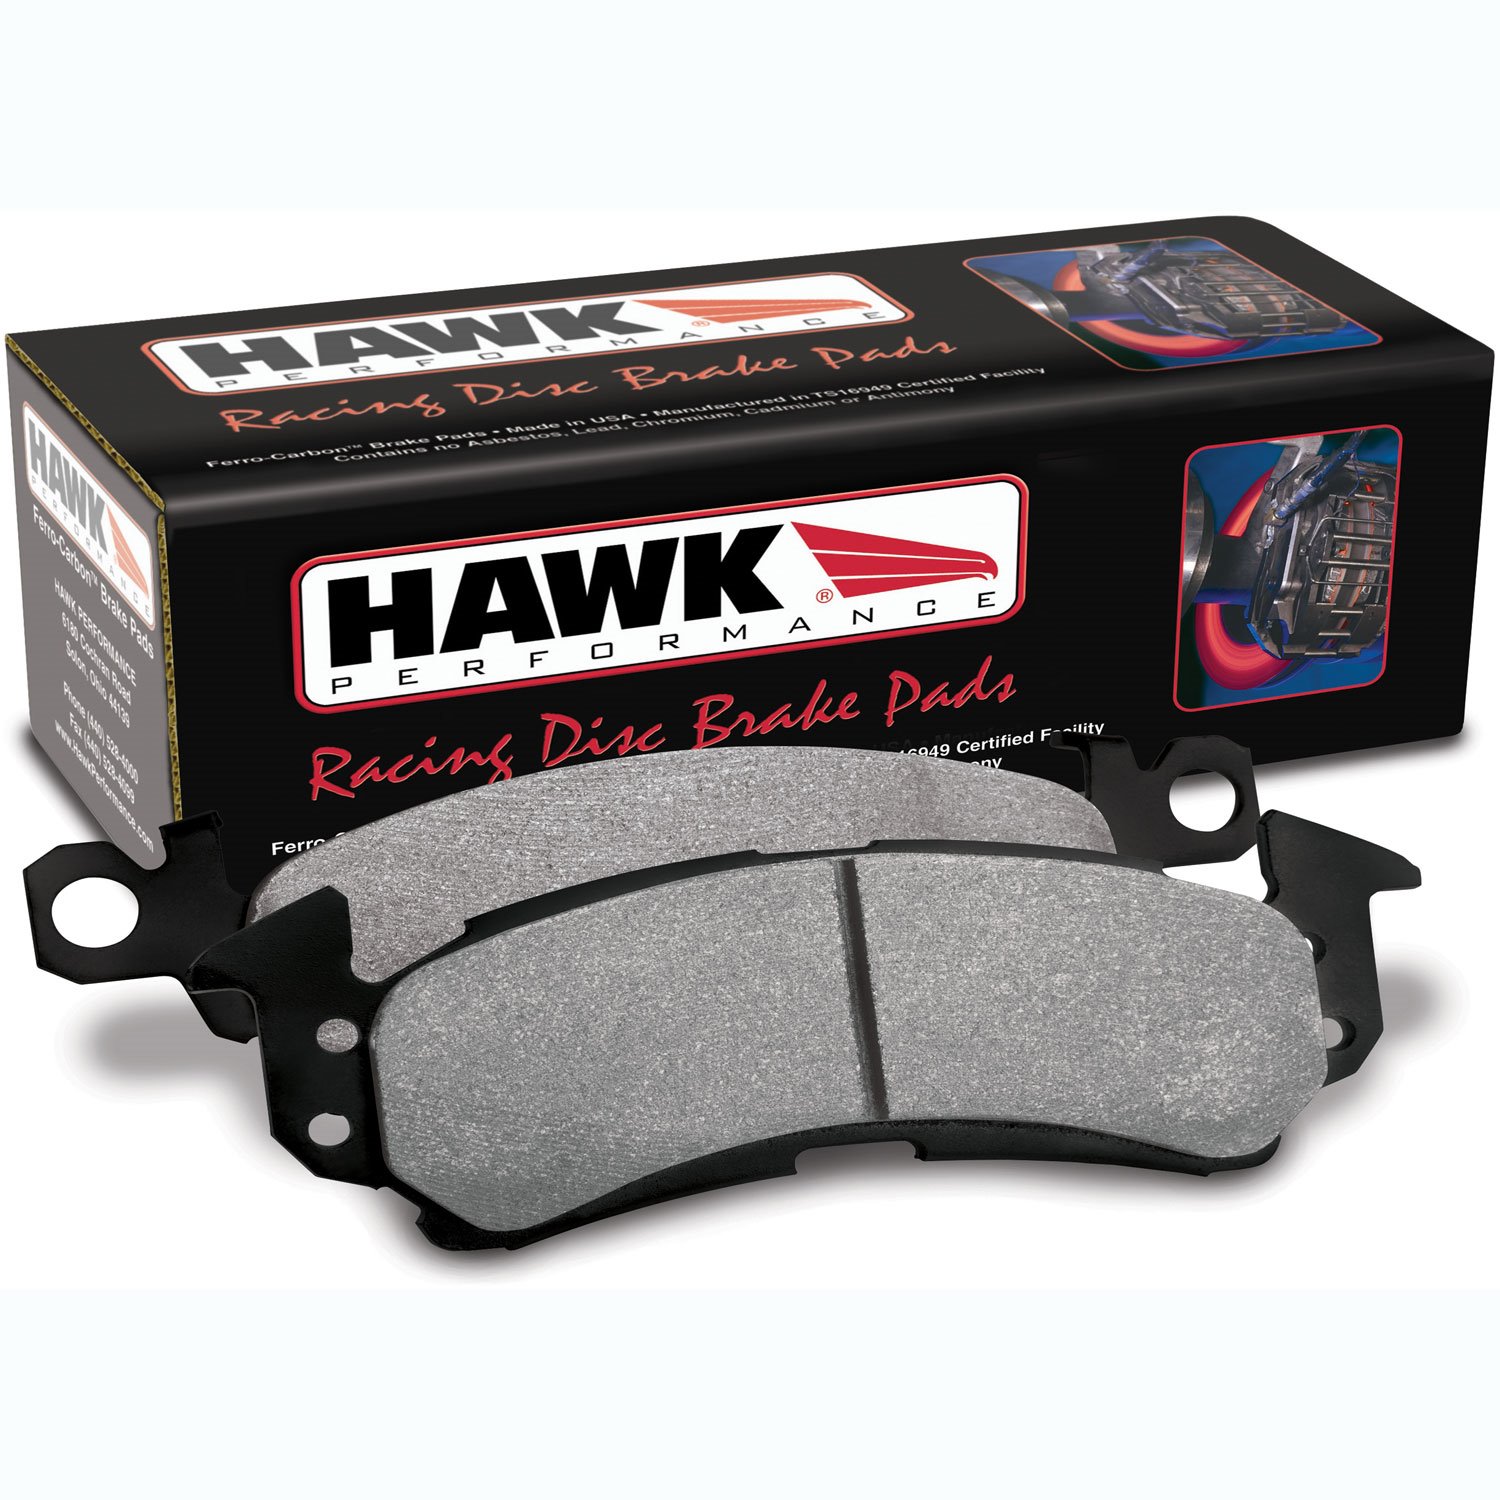 Disc Brake Pad HP Plus w/0.644 Thickness